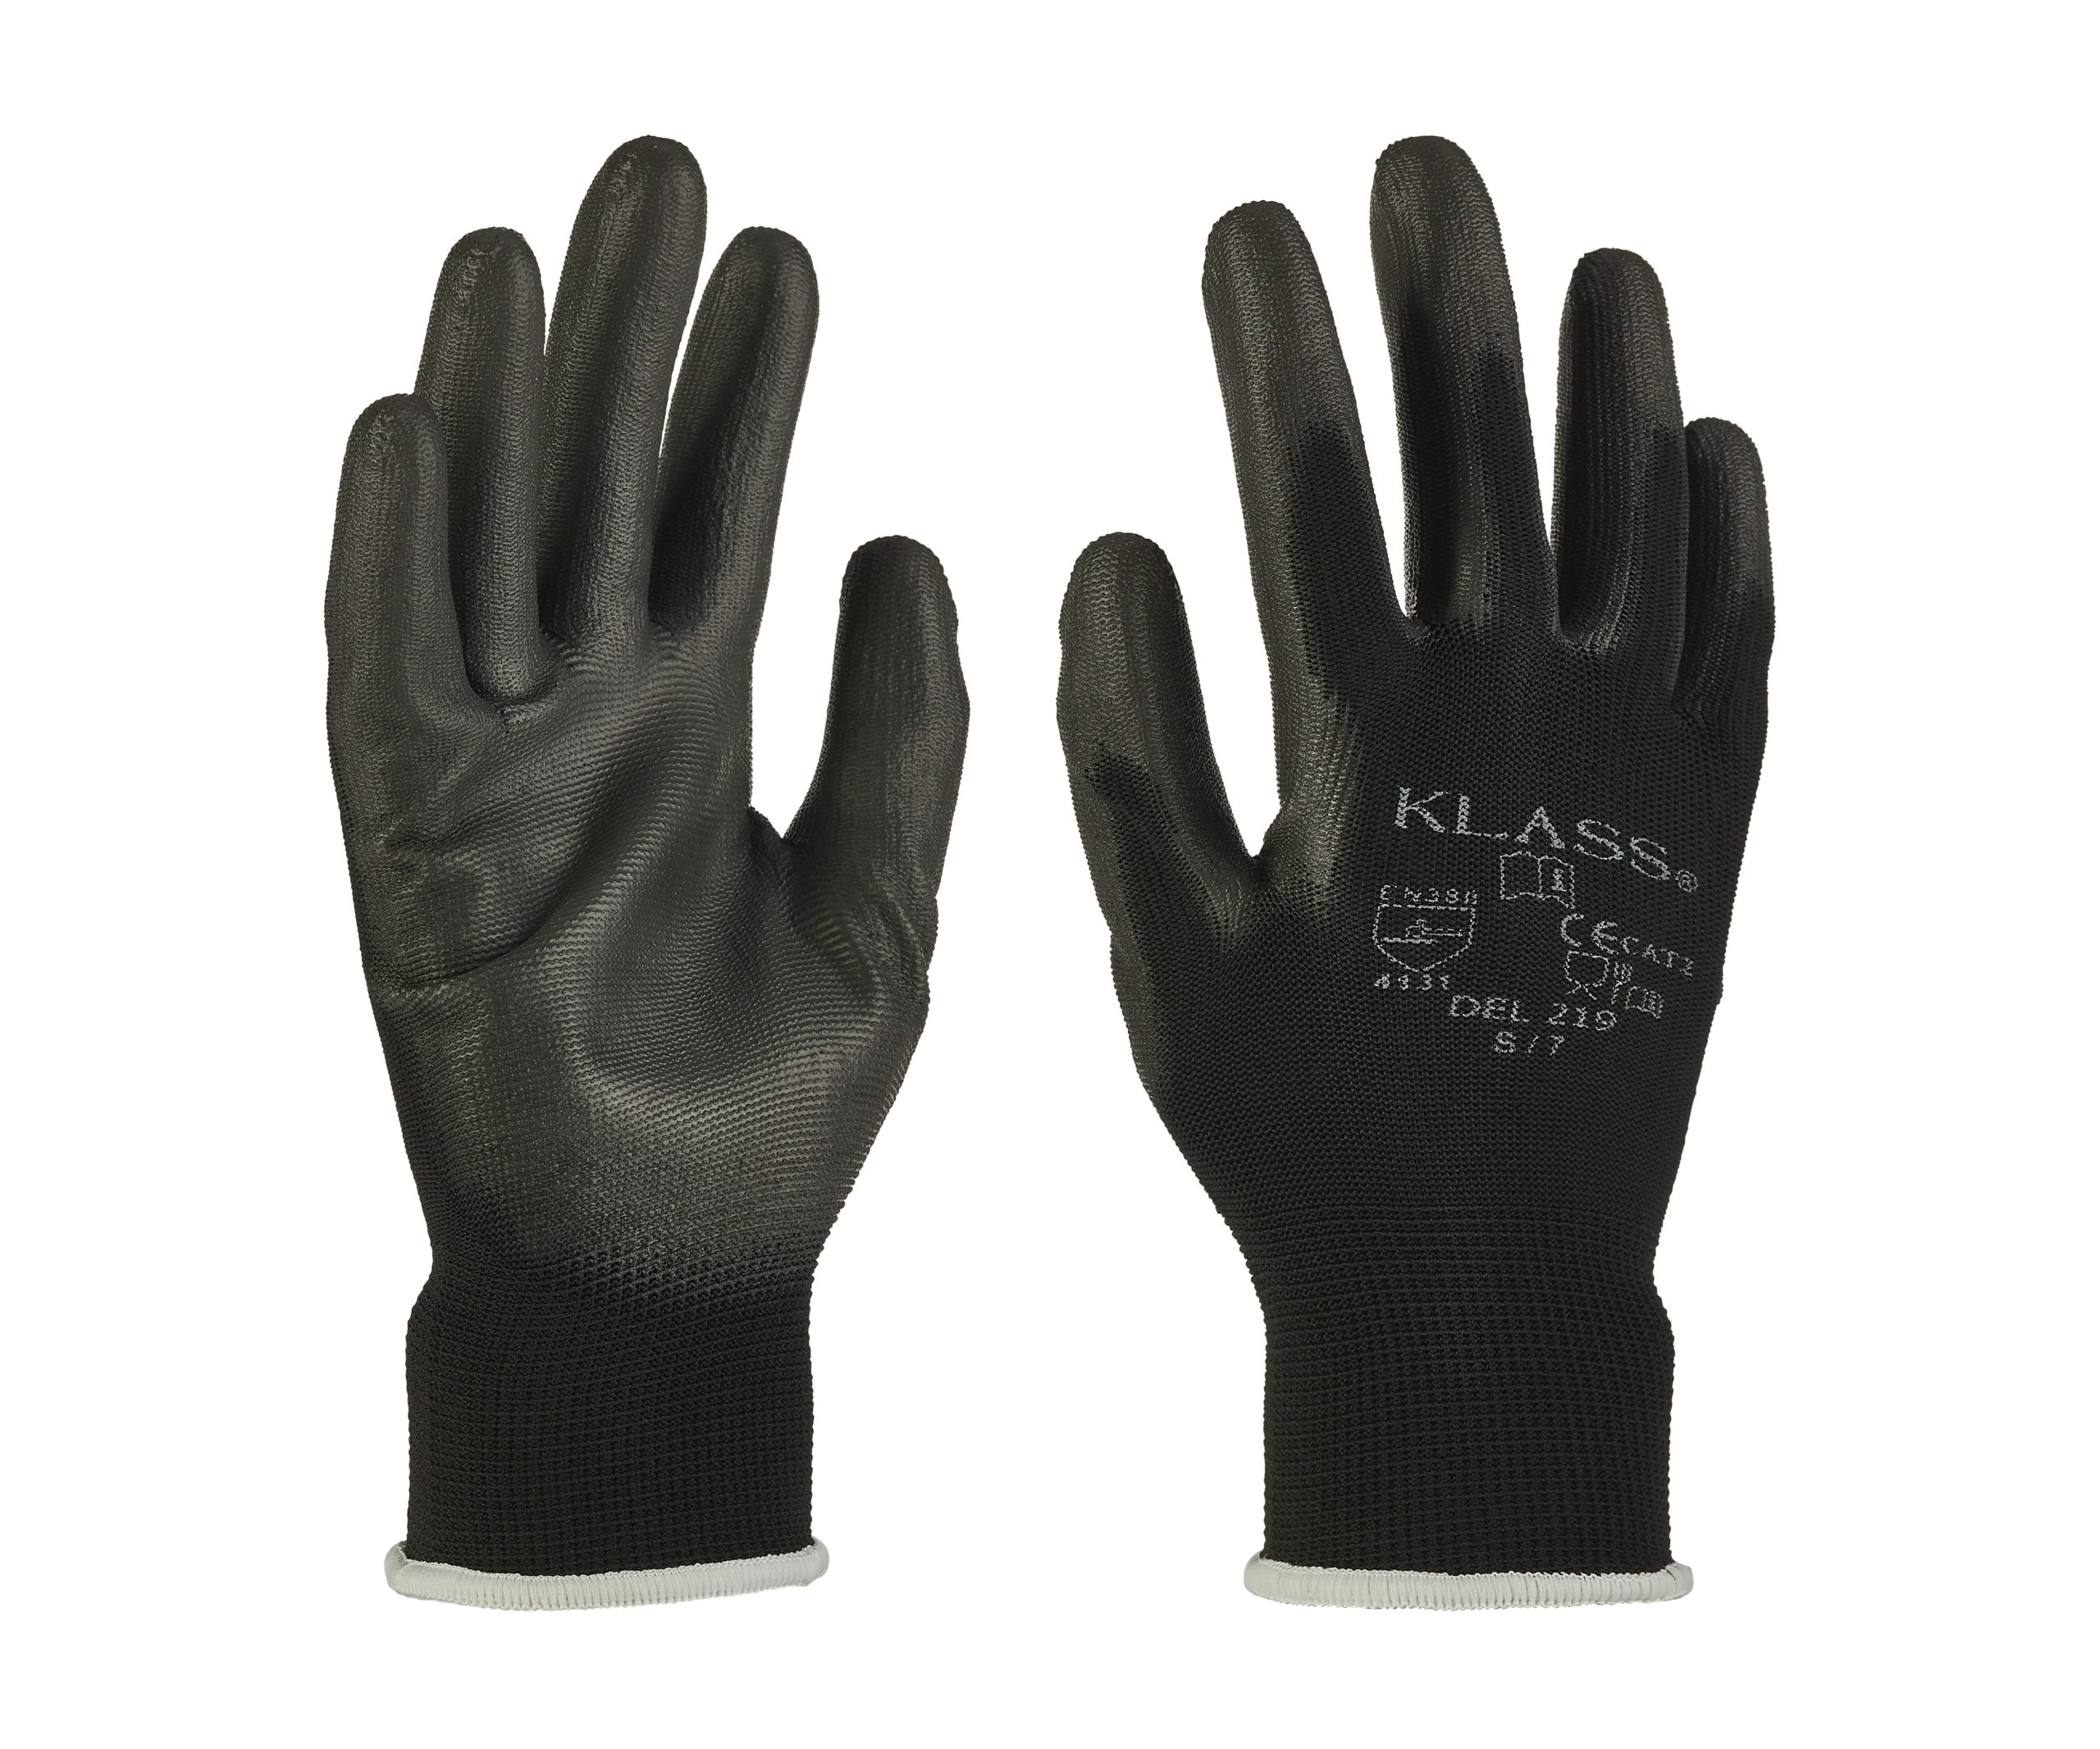 general use work glove